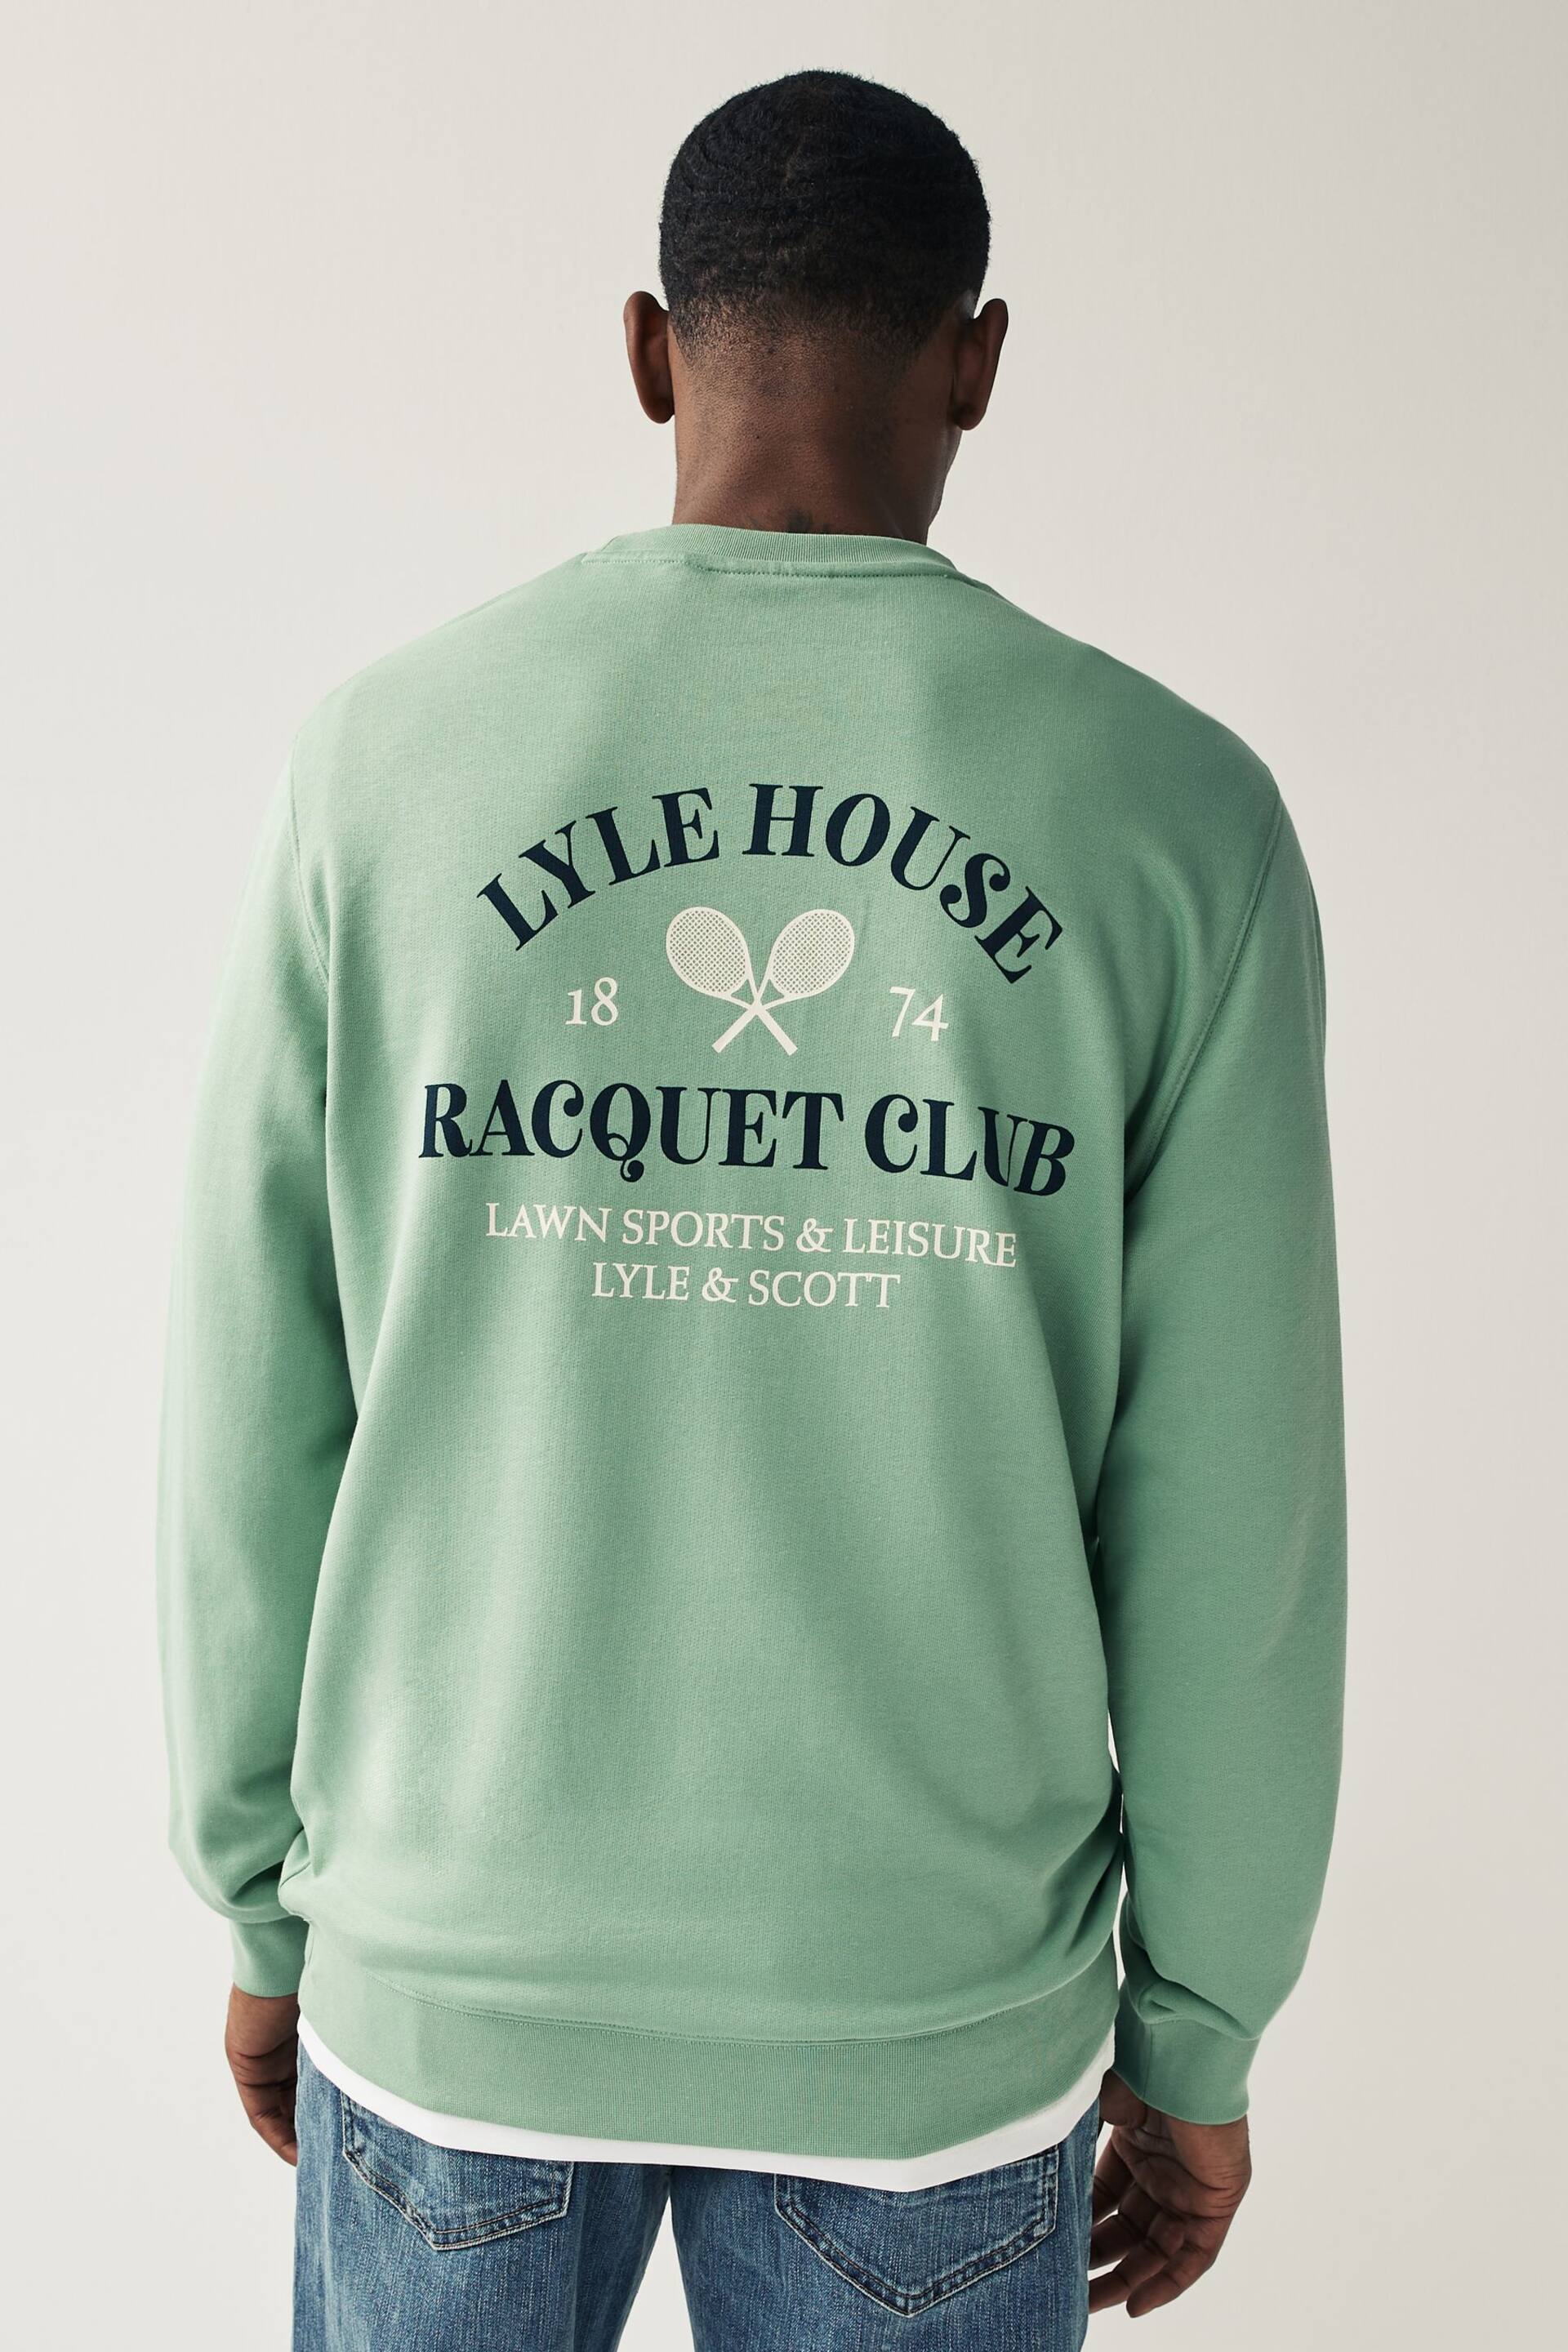 Lyle & Scott Racquet Club Graphic Back Print Sweatshirt - Image 3 of 5